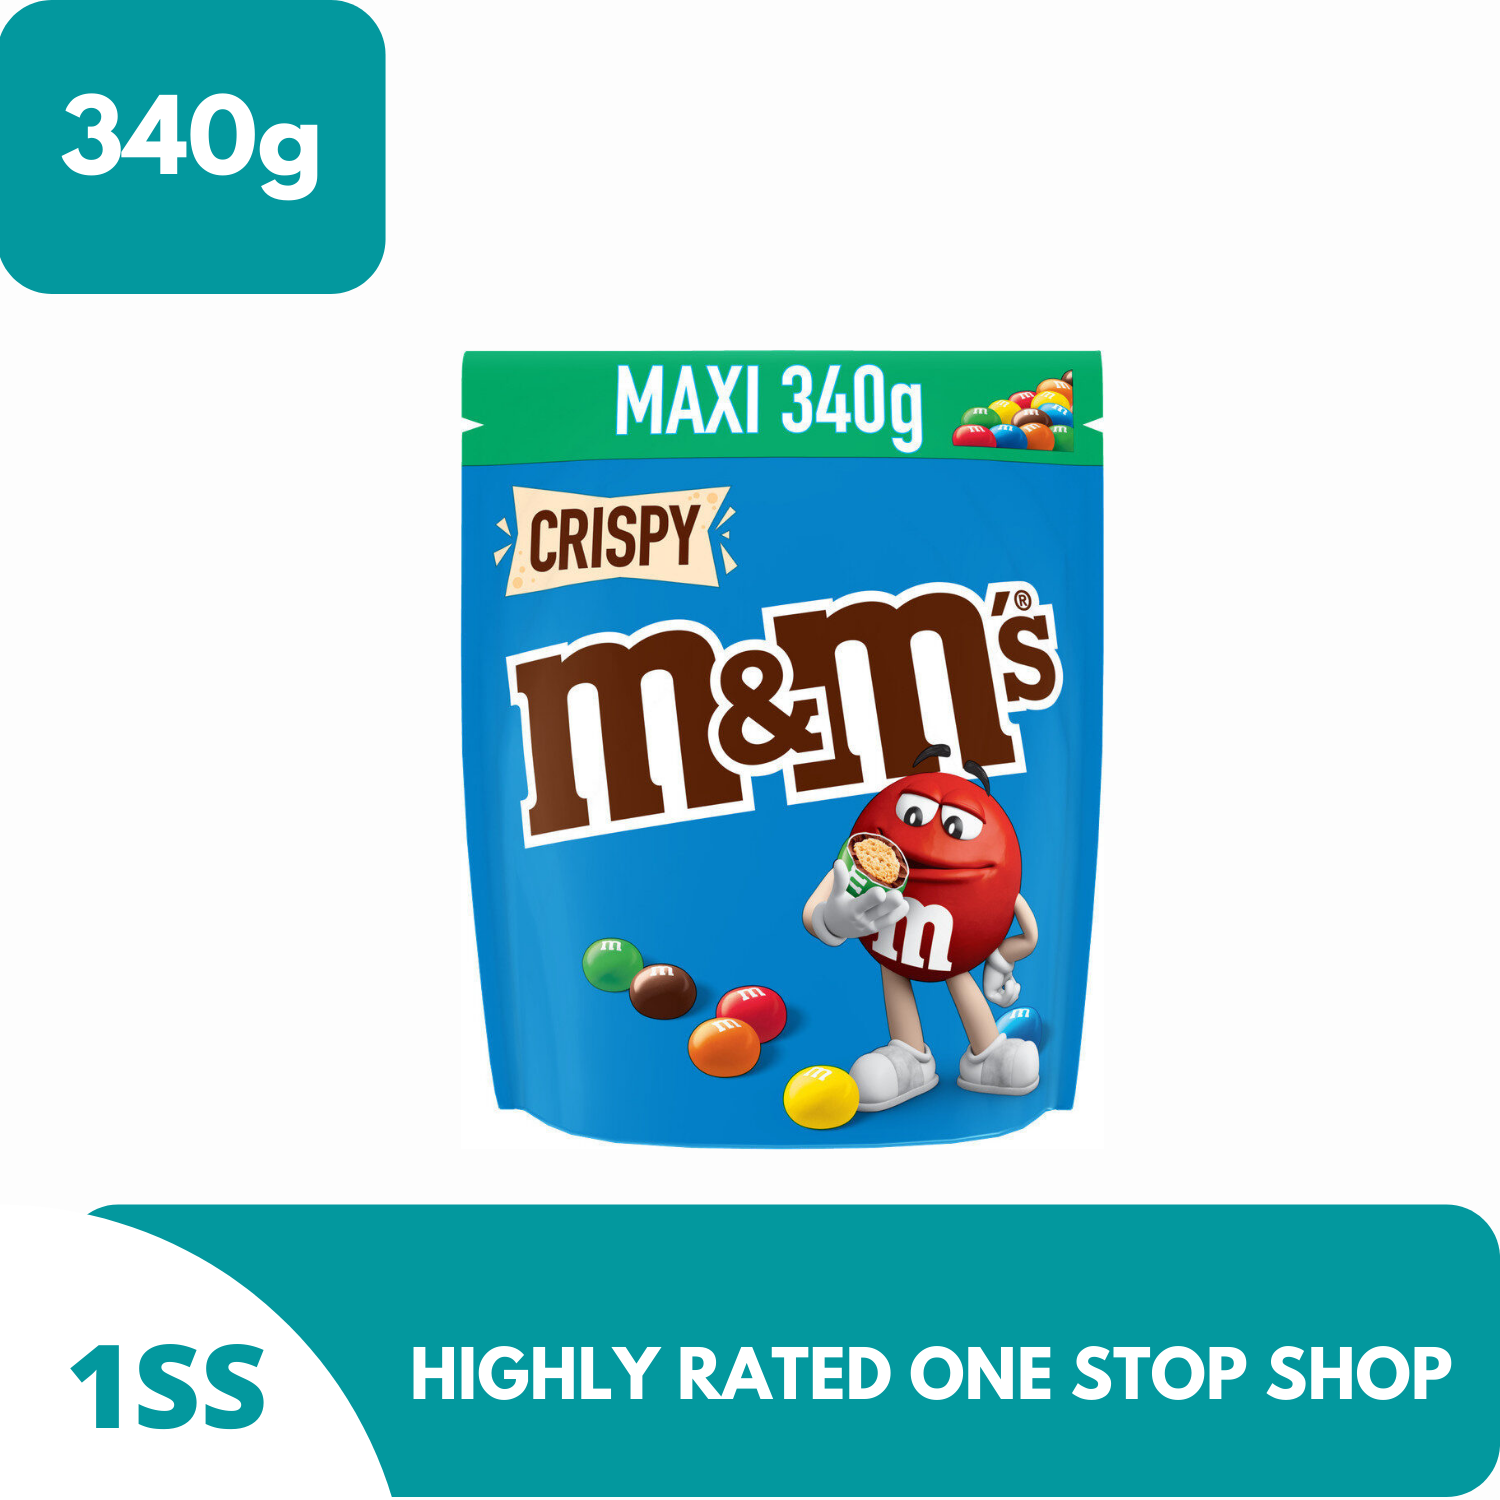 M&M's Crispy Chocolate Pouch 107g